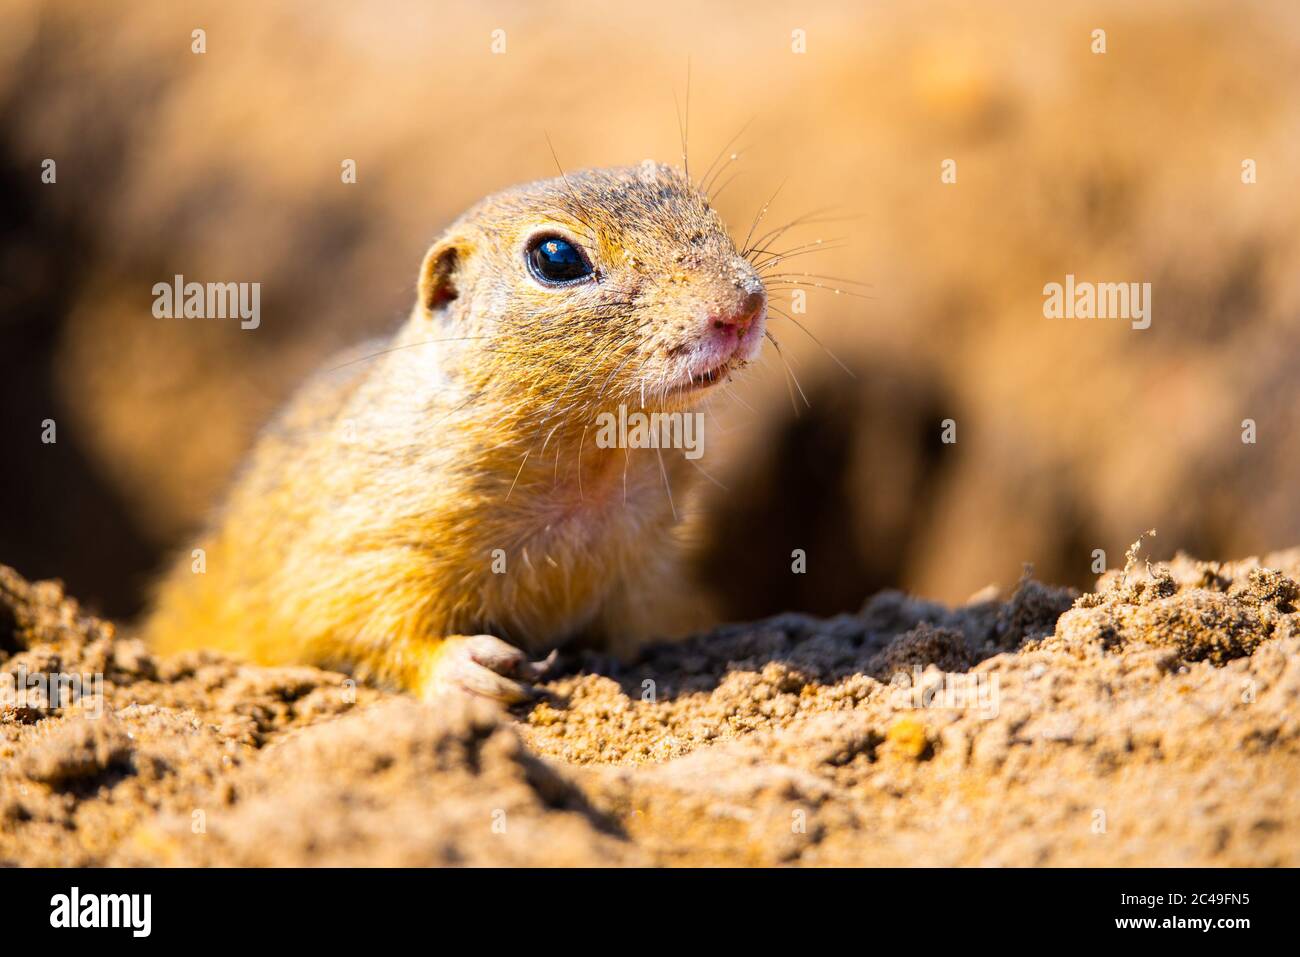 European ground squirrel, Spermophilus citellus, aka European souslik. Small cute rodent in natural habitat. Stock Photo